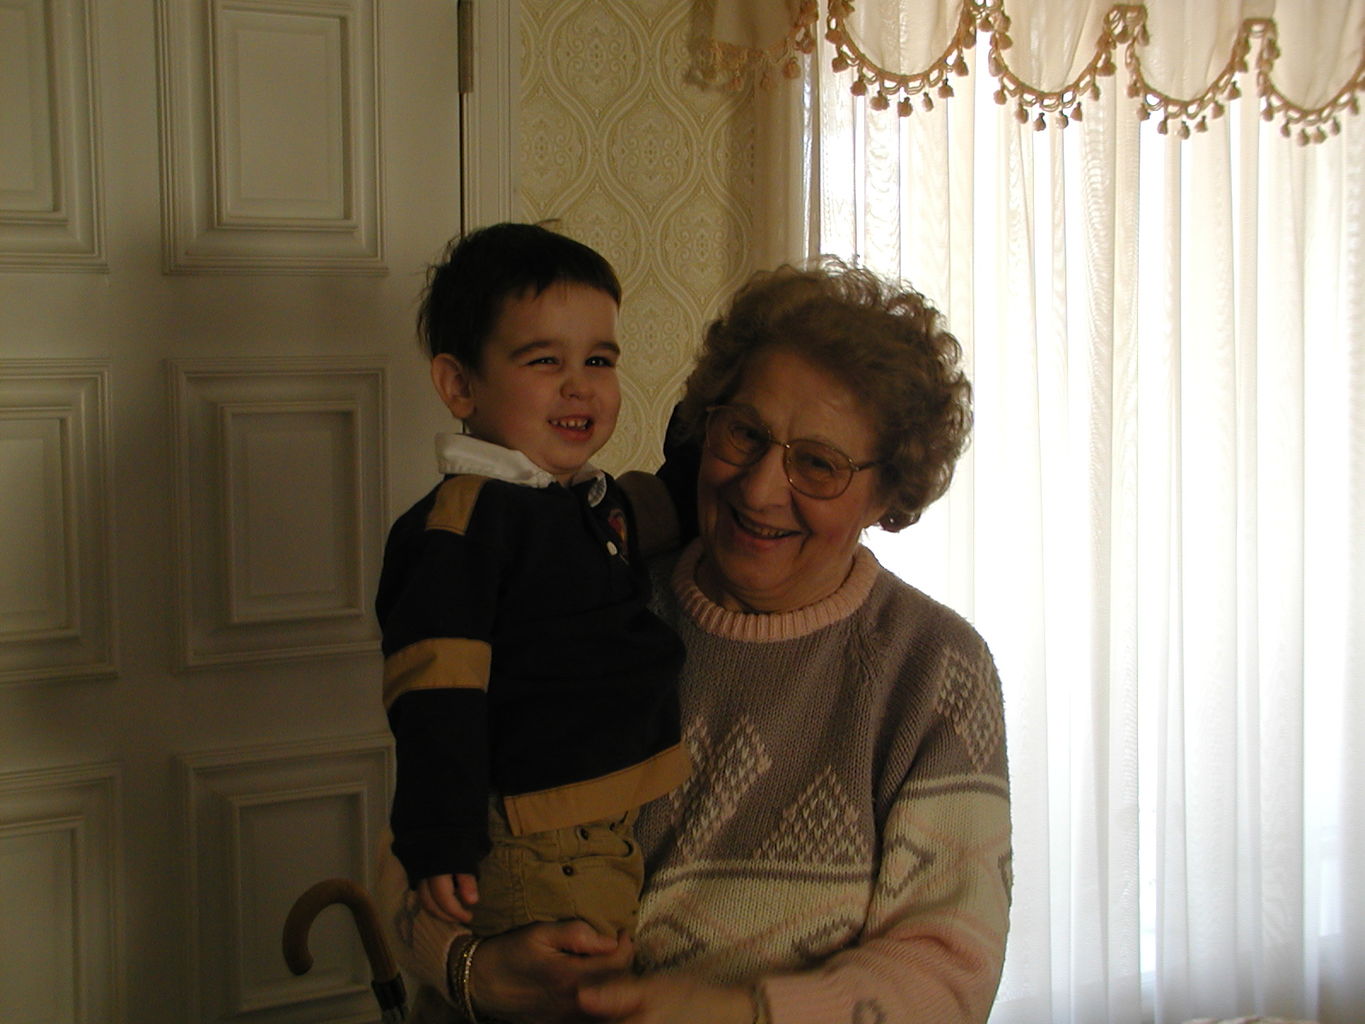 Visit with Grandma Mary
